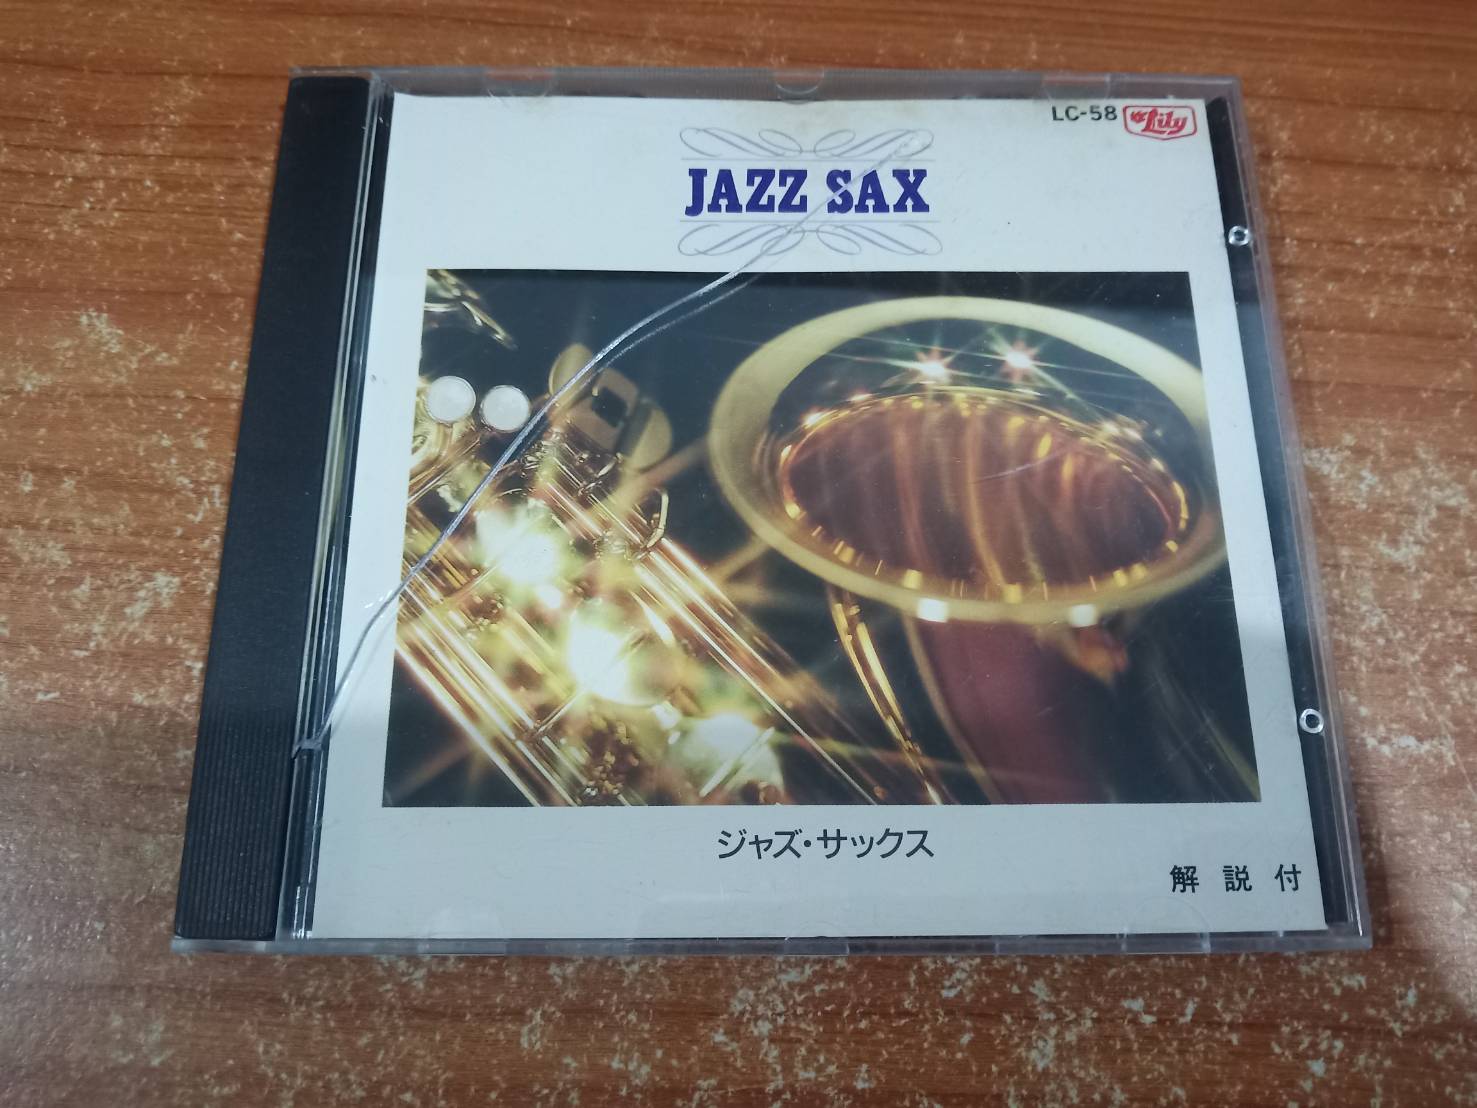 CD MUSIC ซีดี เพลง JAZZ SAX  ***โปรดดูภาพและอ่านรายละเอียดสินค้าก่อนทำการสั่งซื้อ***